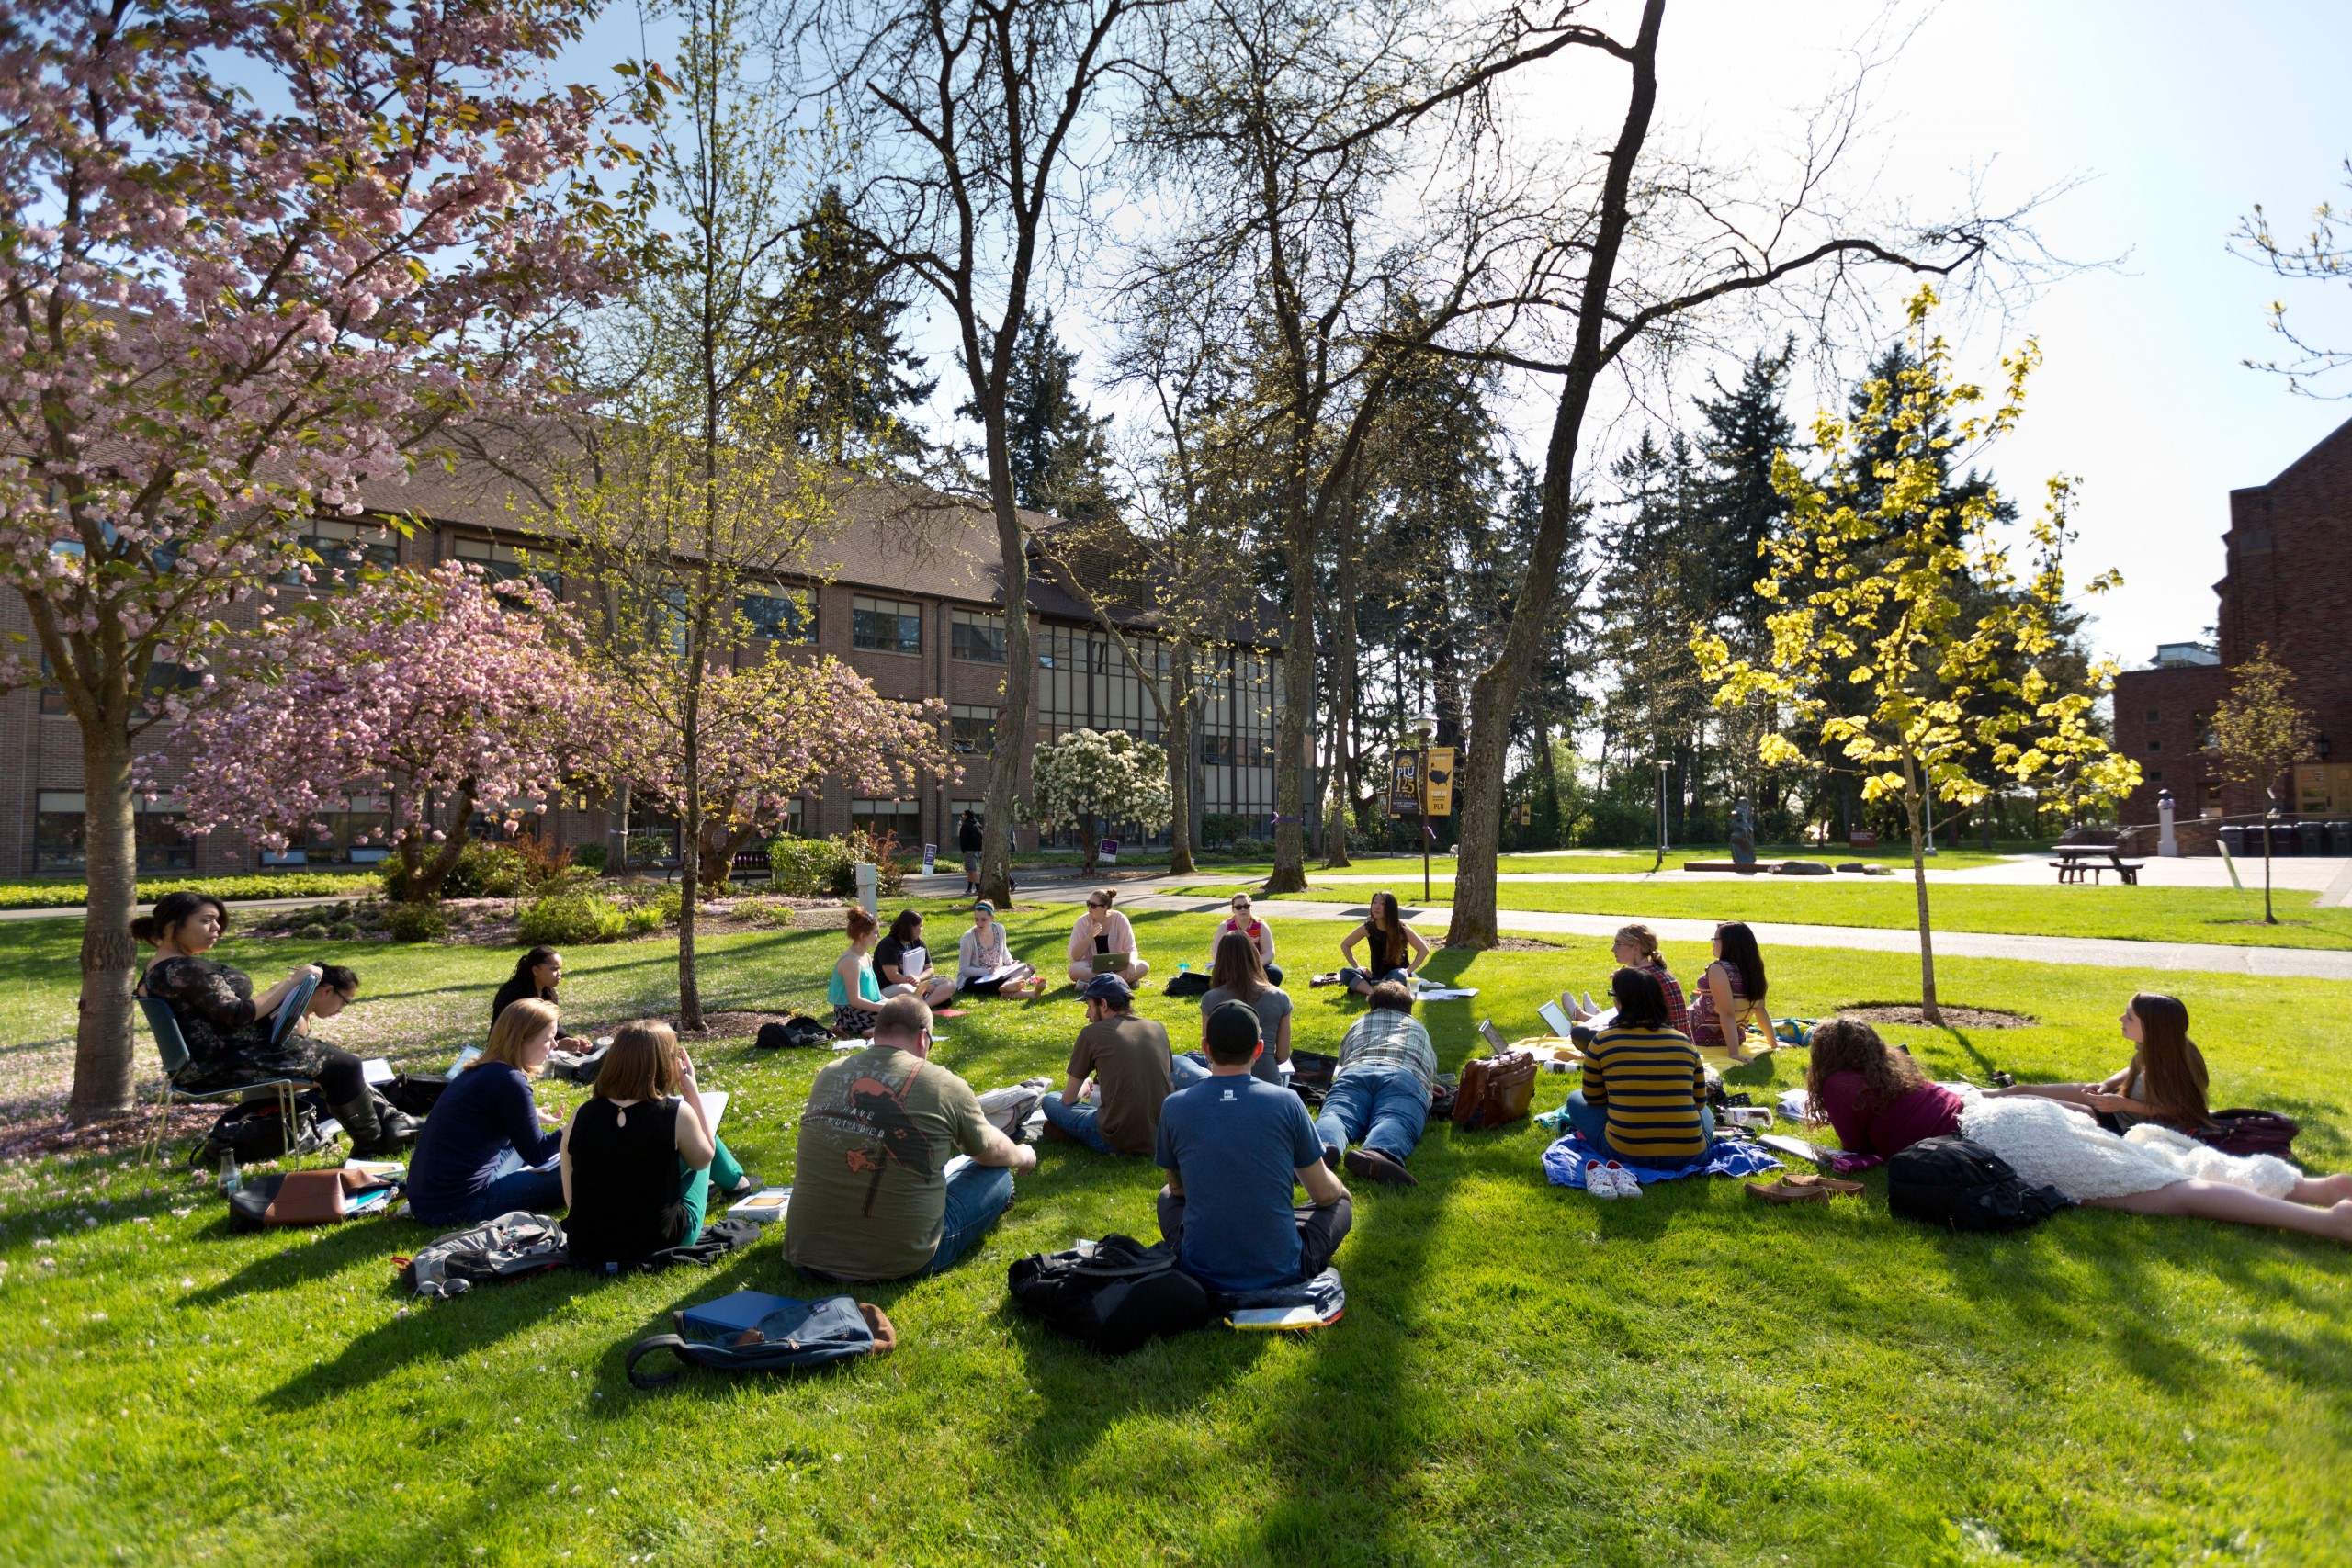 Outdoor class at PLU on Monday, April 20, 2015. (Photo: John Froschauer/PLU)